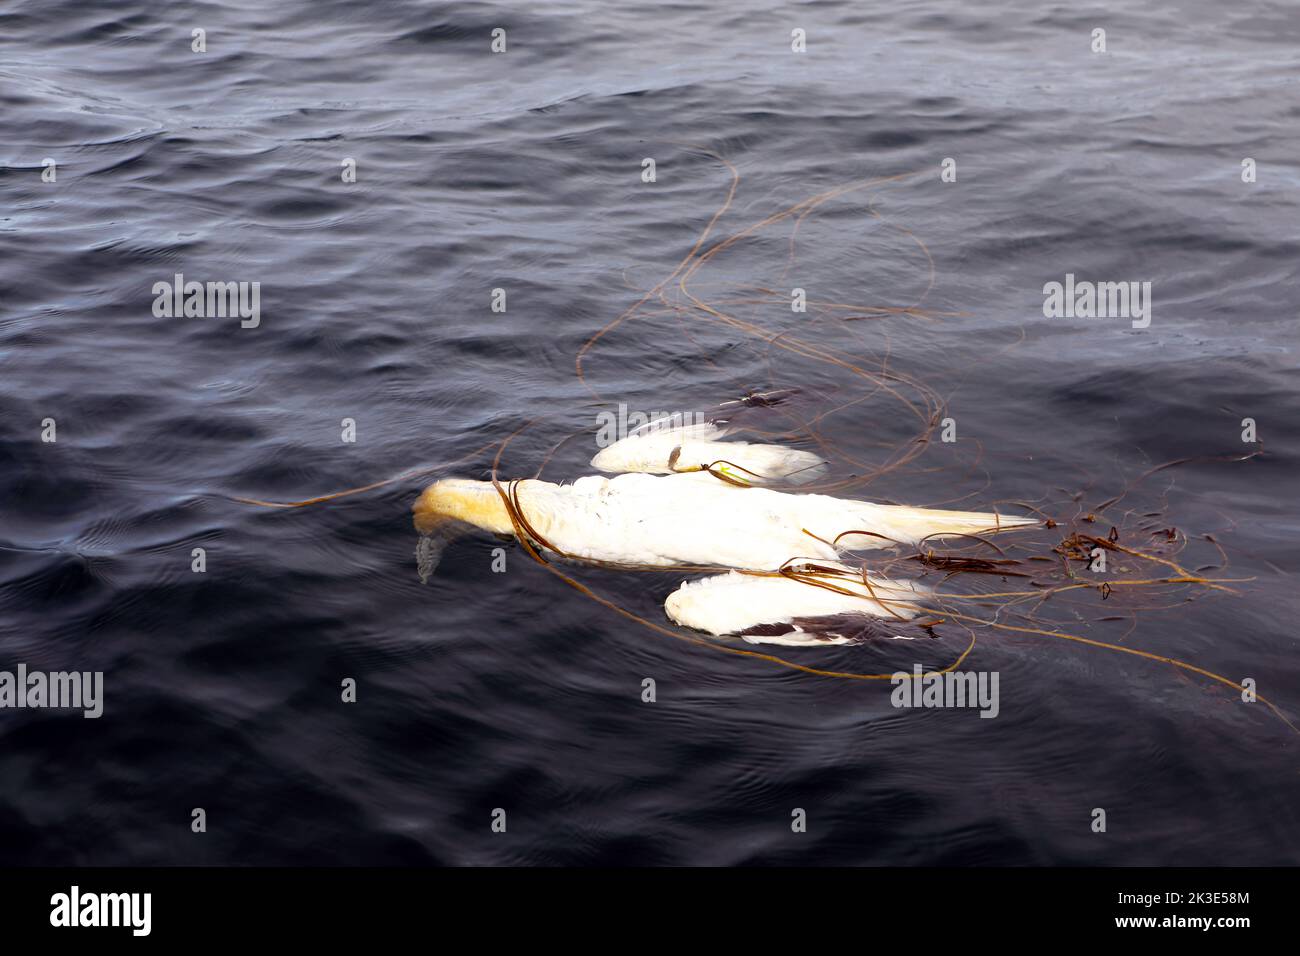 Dead gannet, a casualty of Avian flu, floating in the sea tangled in seaweed Stock Photo